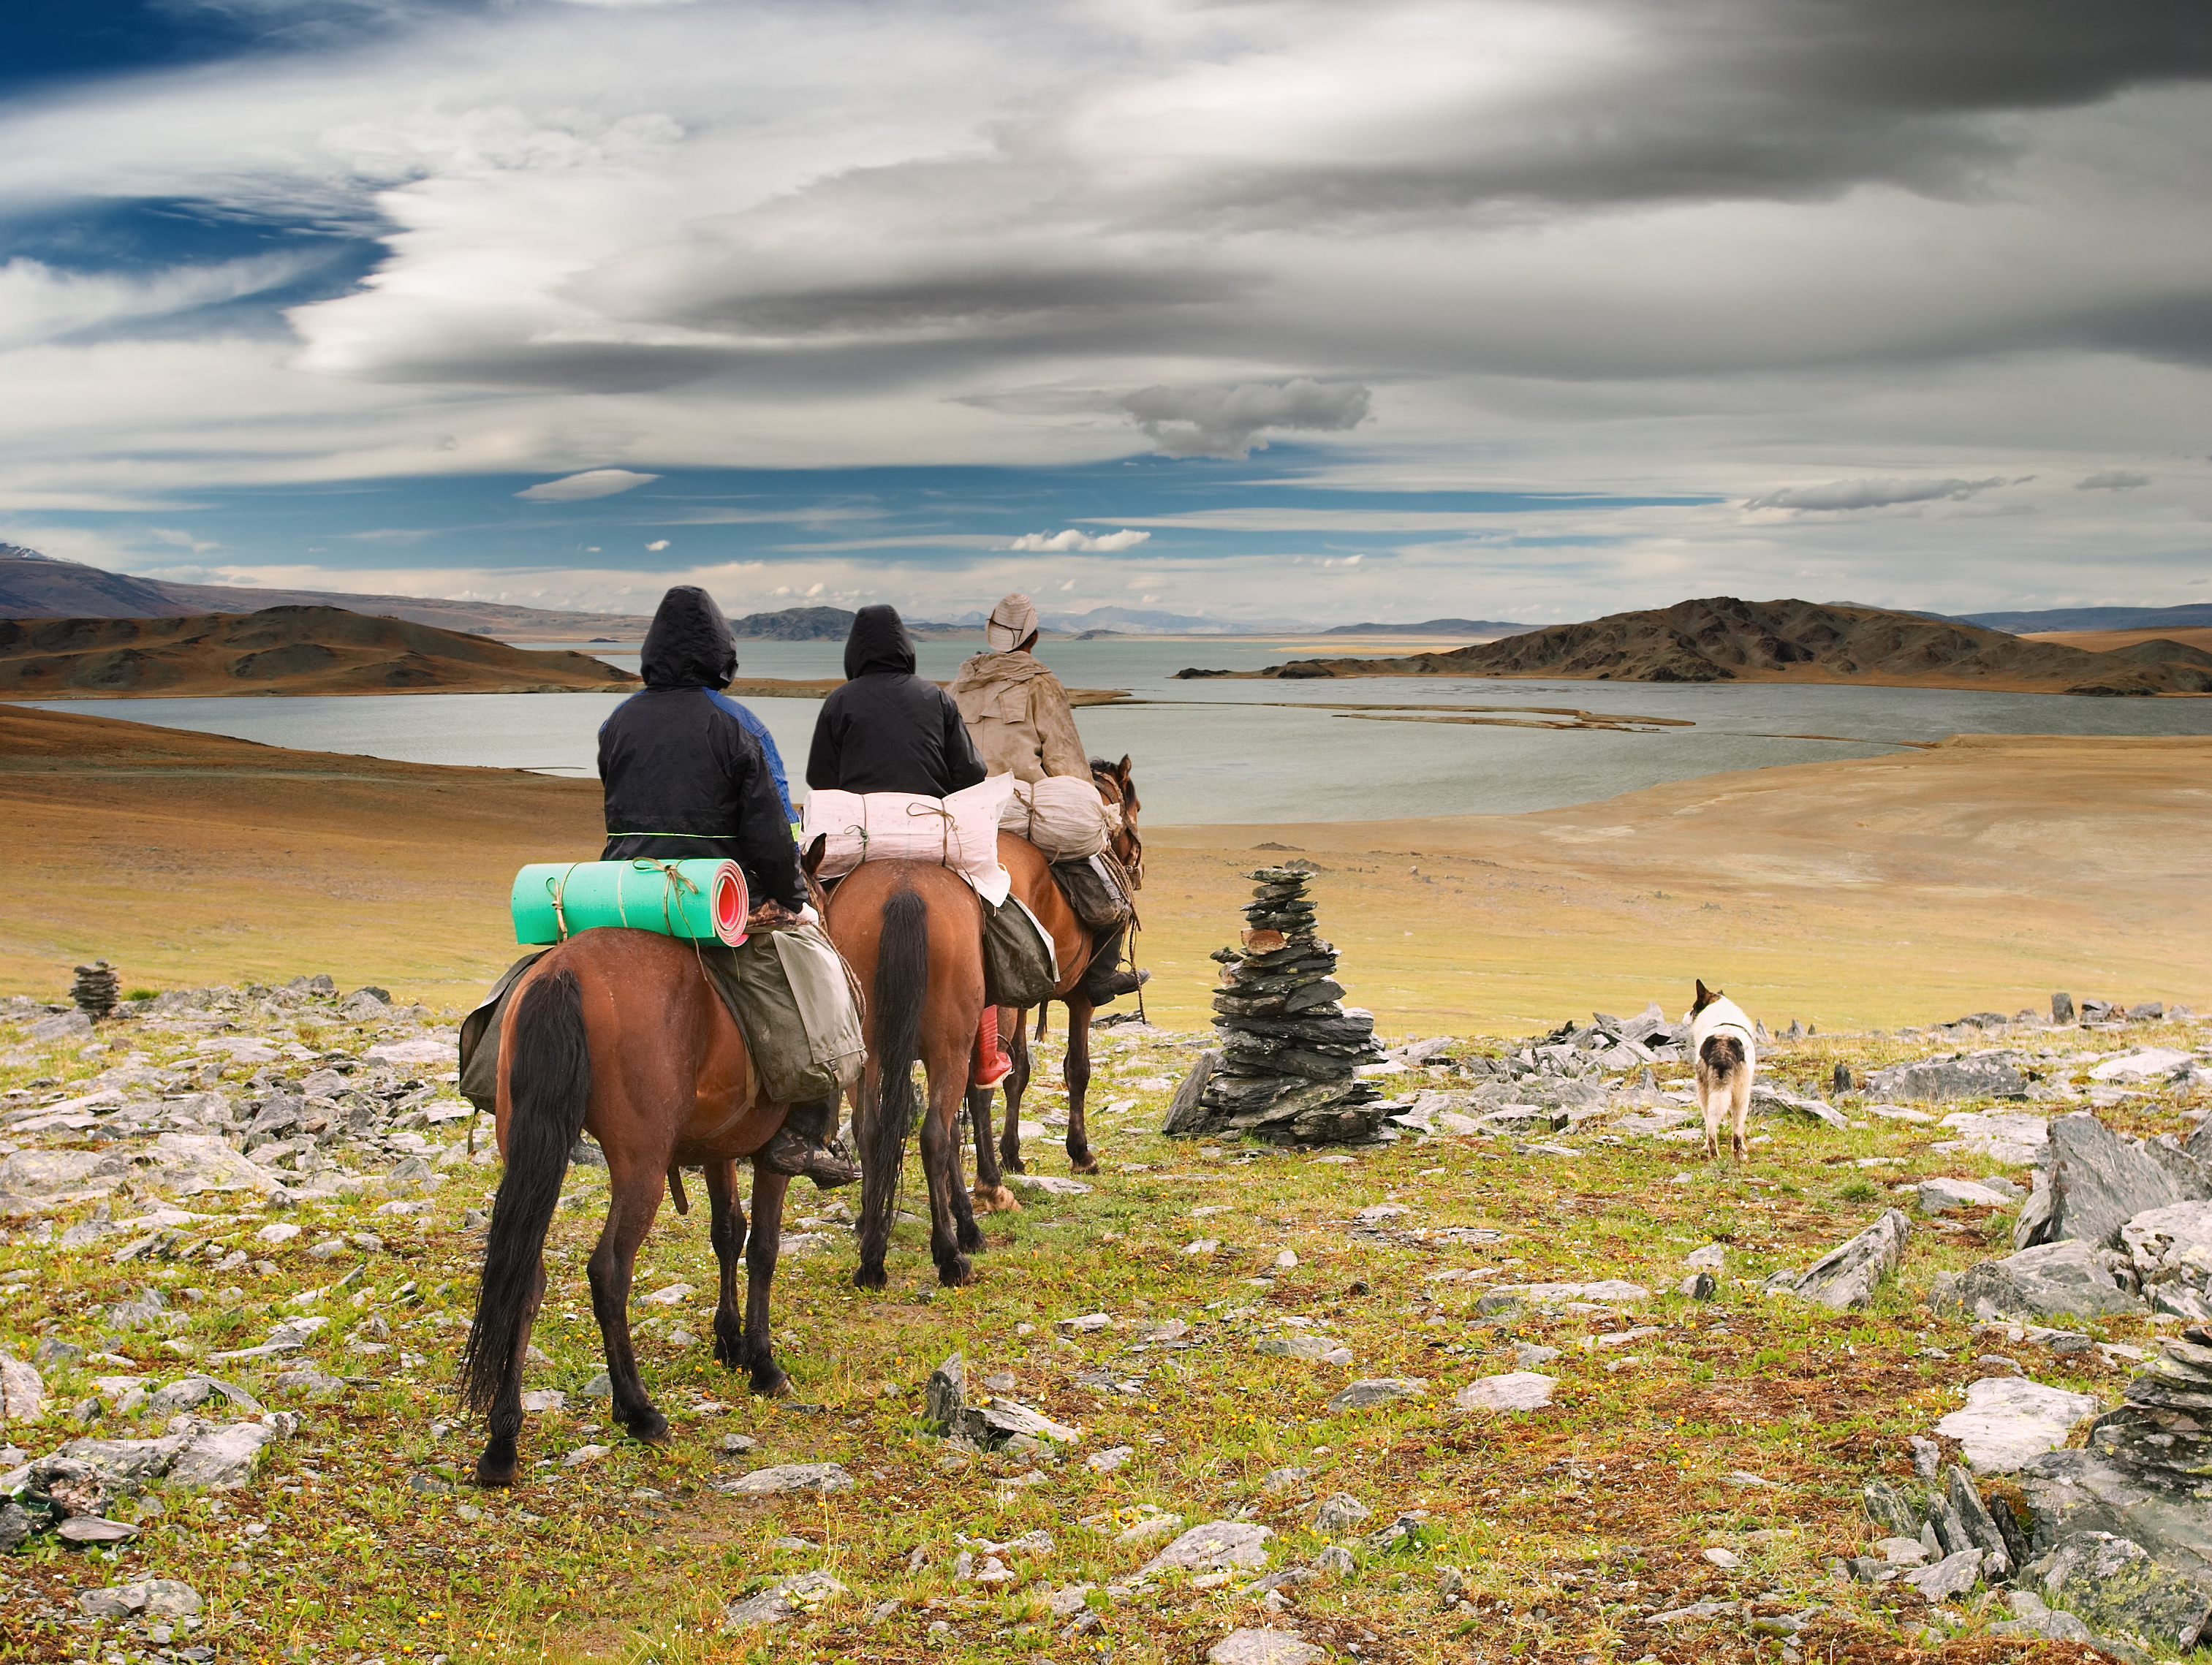 Mongolians are avid horseriders